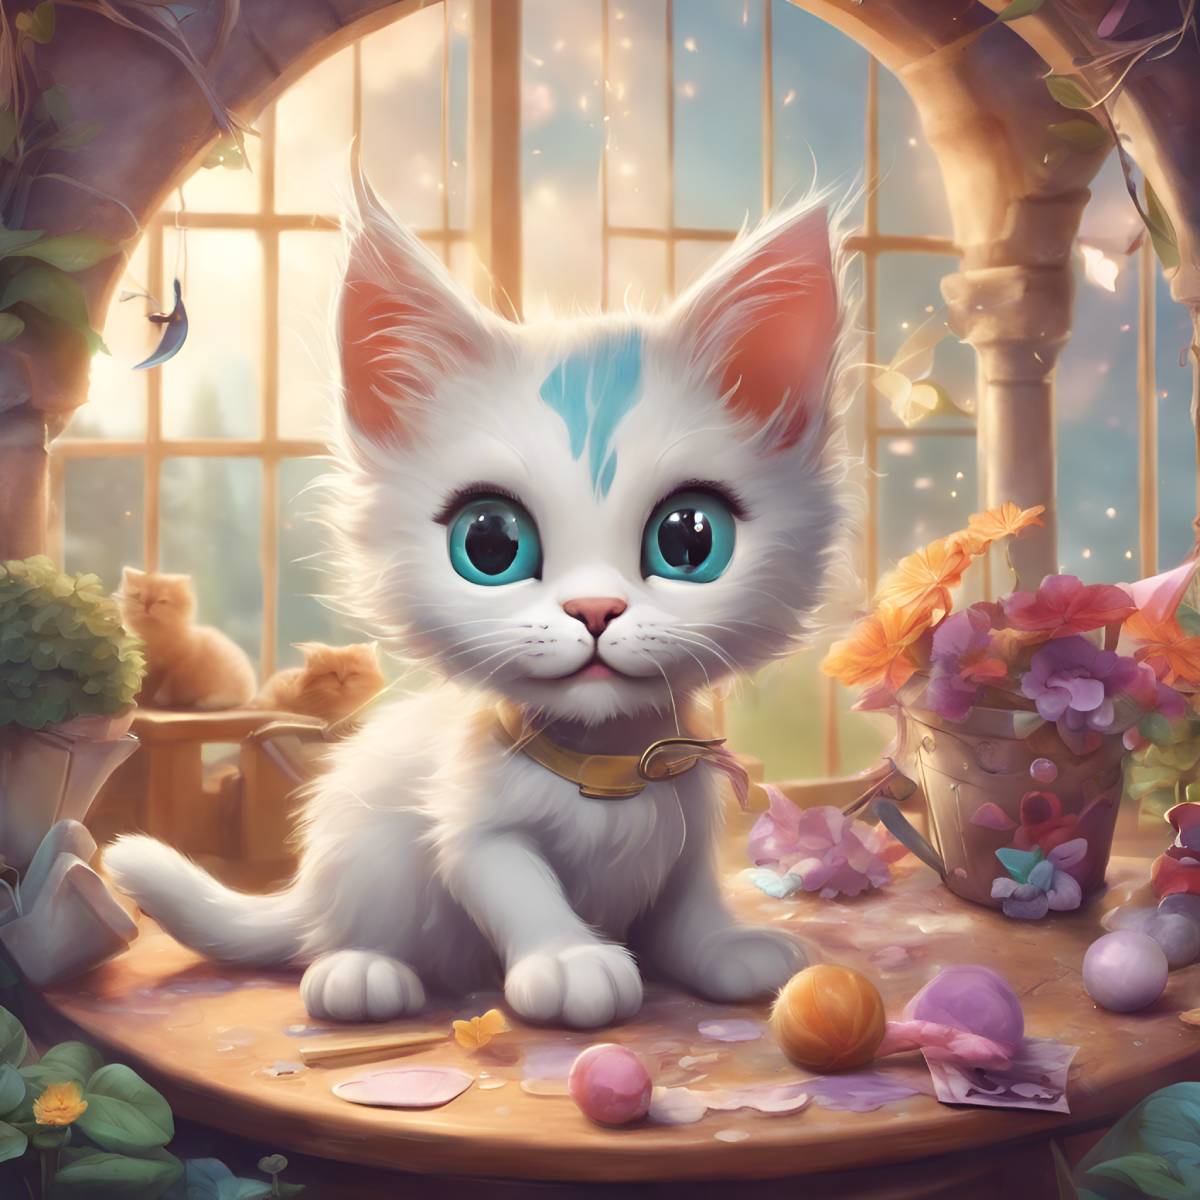 diamants-wizard-diamond-painting-kits-Animaux-Cat-Whimsical-Kitten-Fantasy-original.jpg